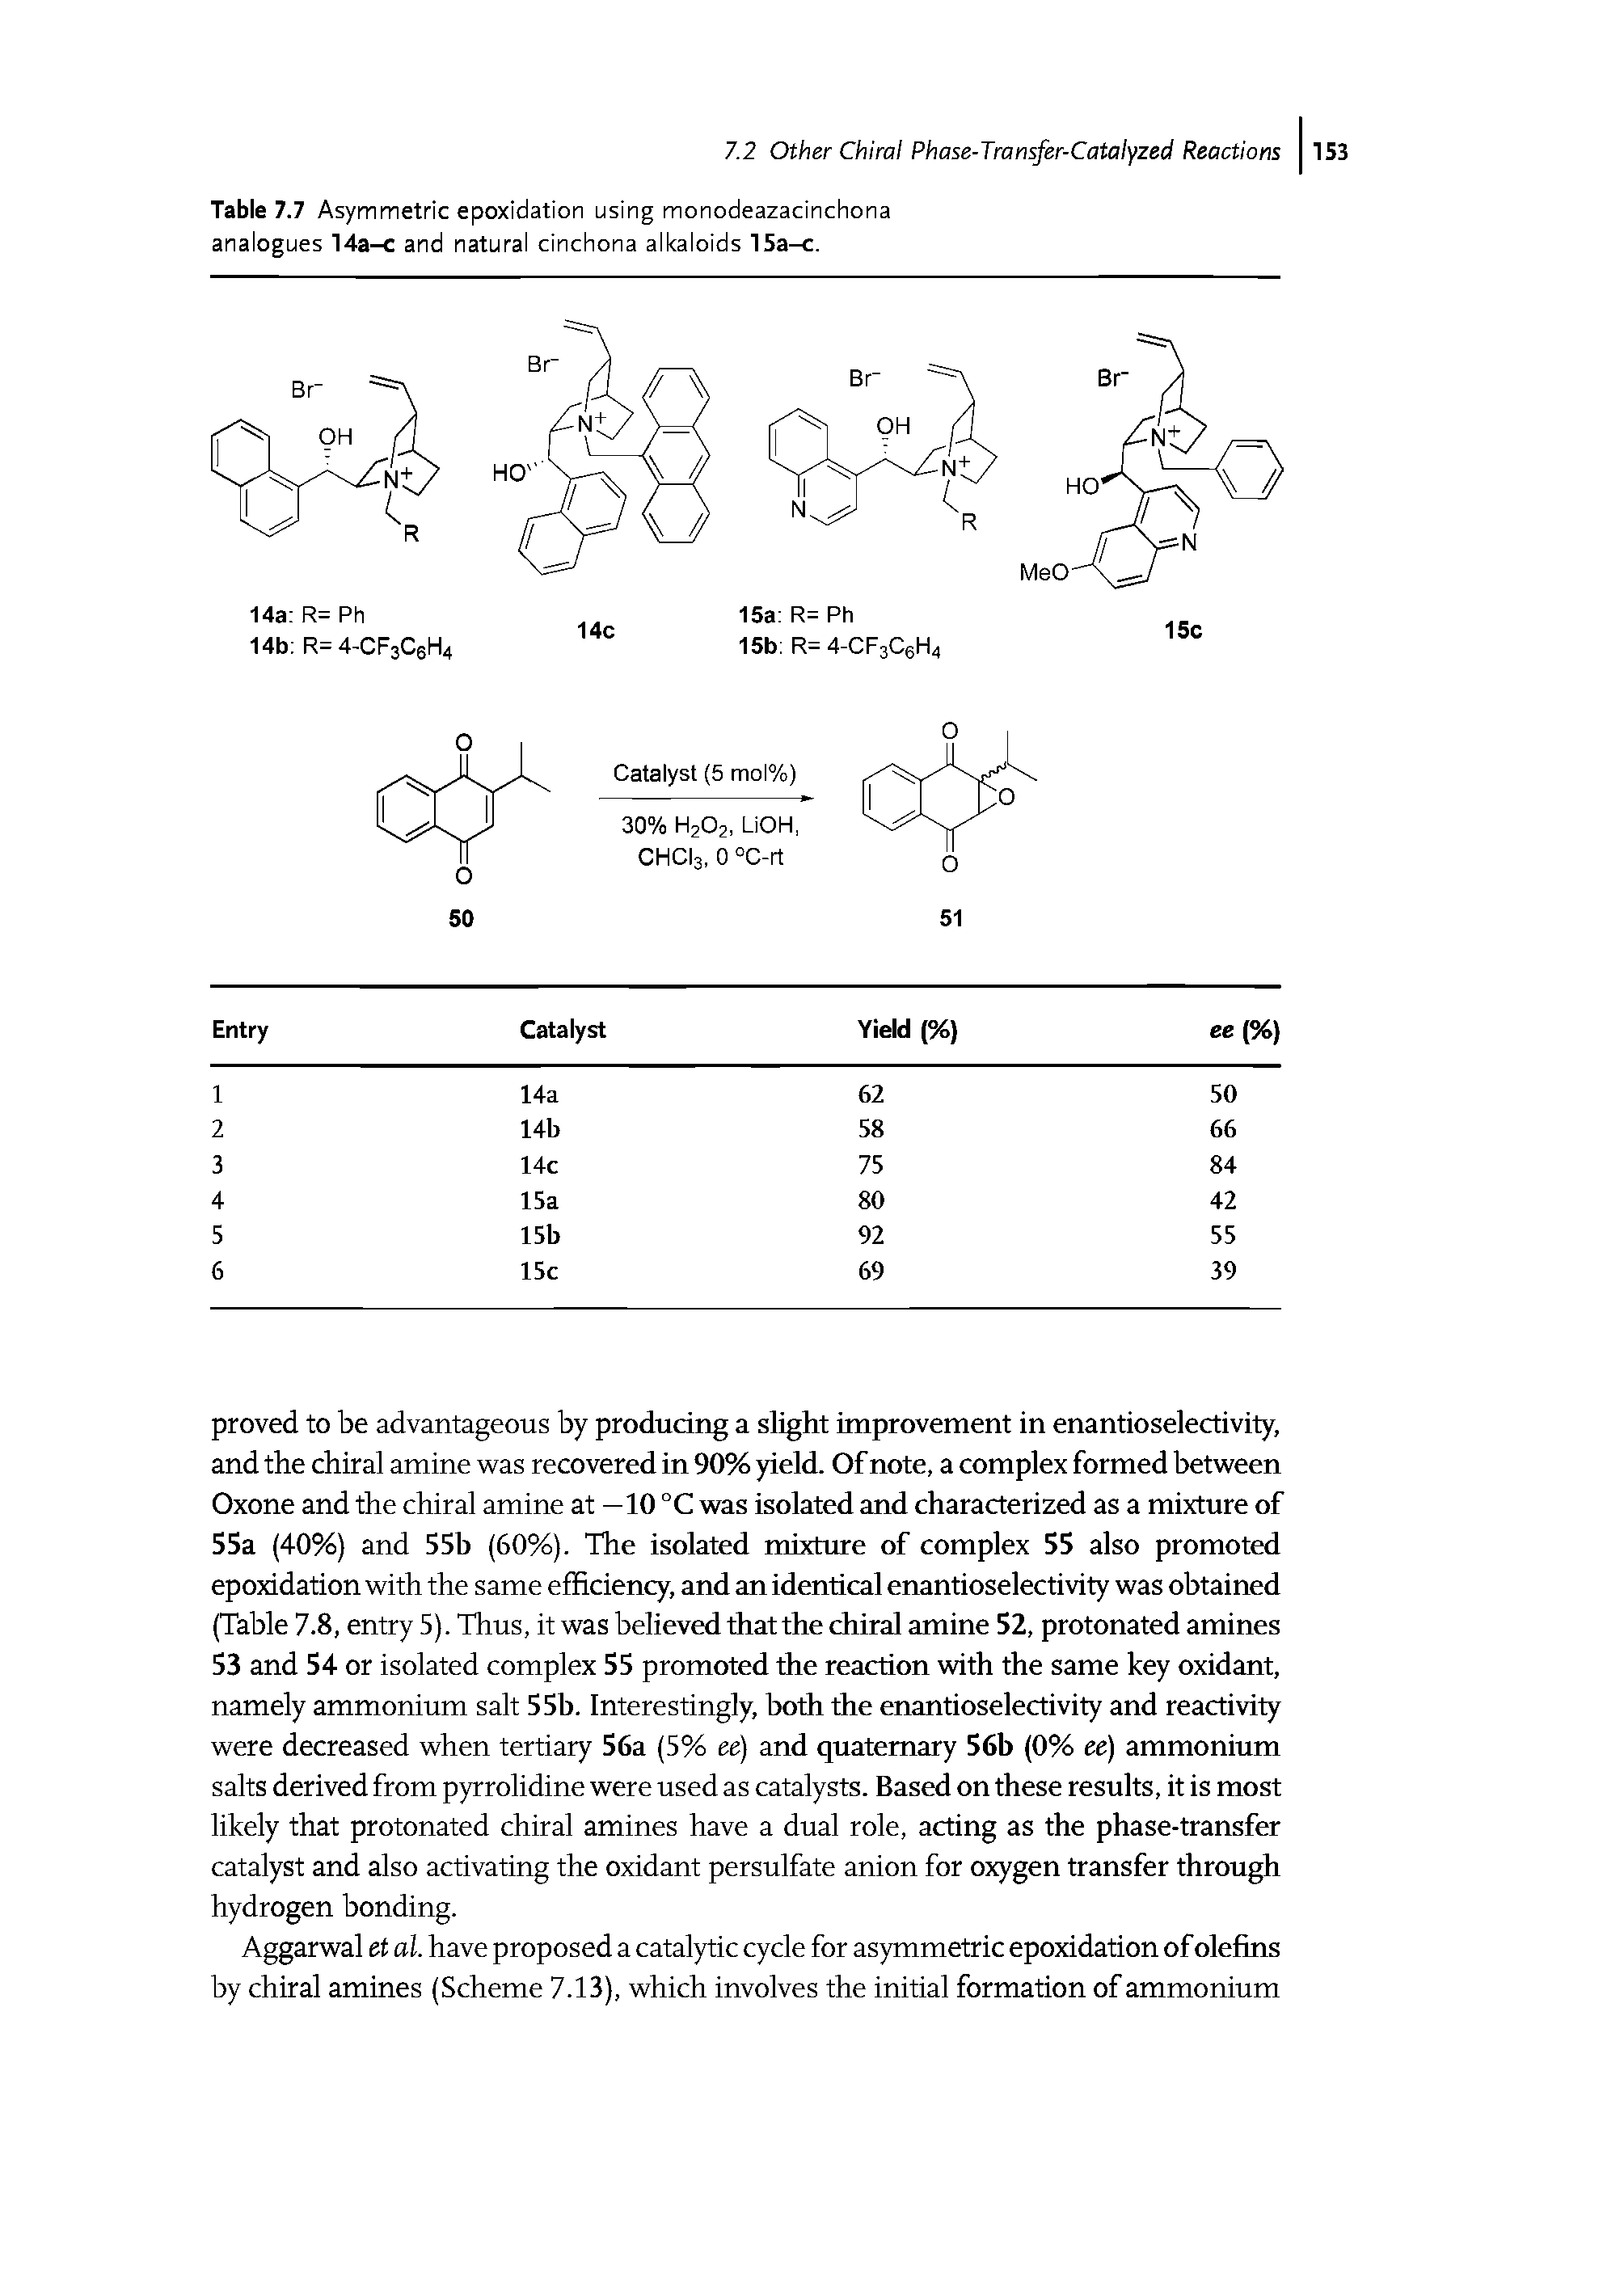 Table 7.7 Asymmetric epoxidation using monodeazacinchona analogues 14a-c and natural cinchona alkaloids 15a-c.